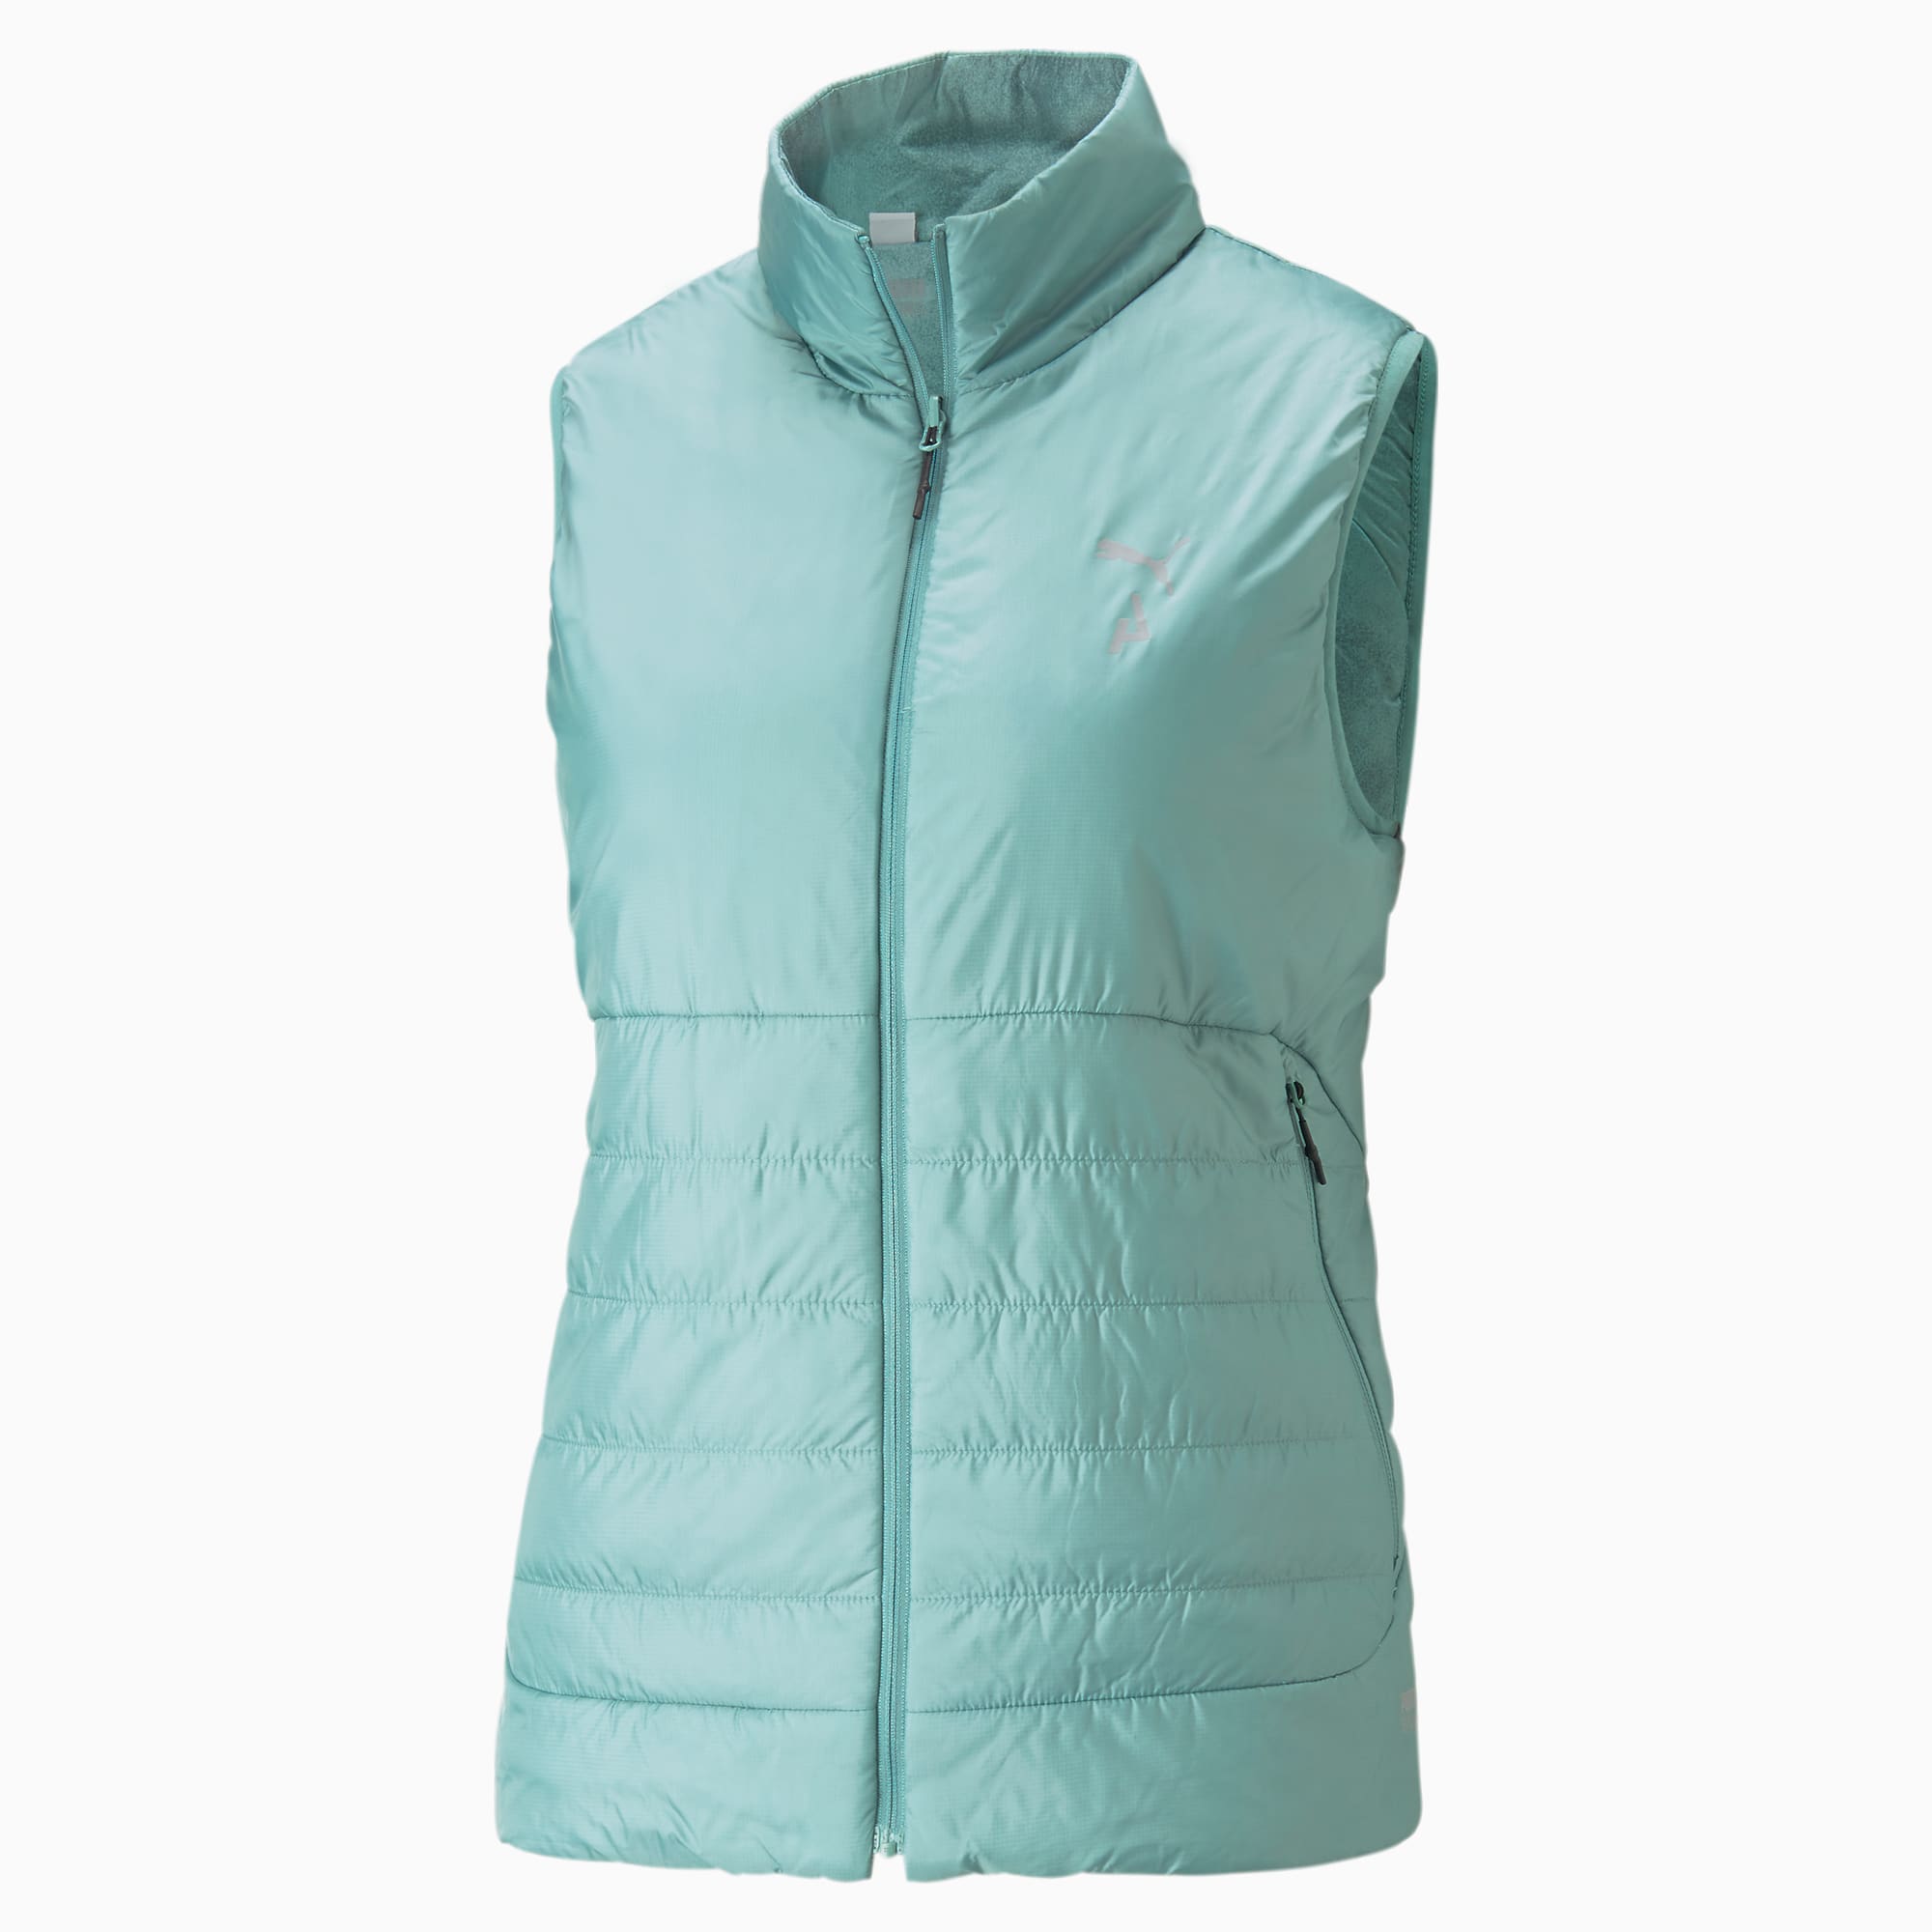 PUMA Seasons Reversible Primaloft Hiking Vest Women Women's Jacket, Adriatic, Size M, Clothing